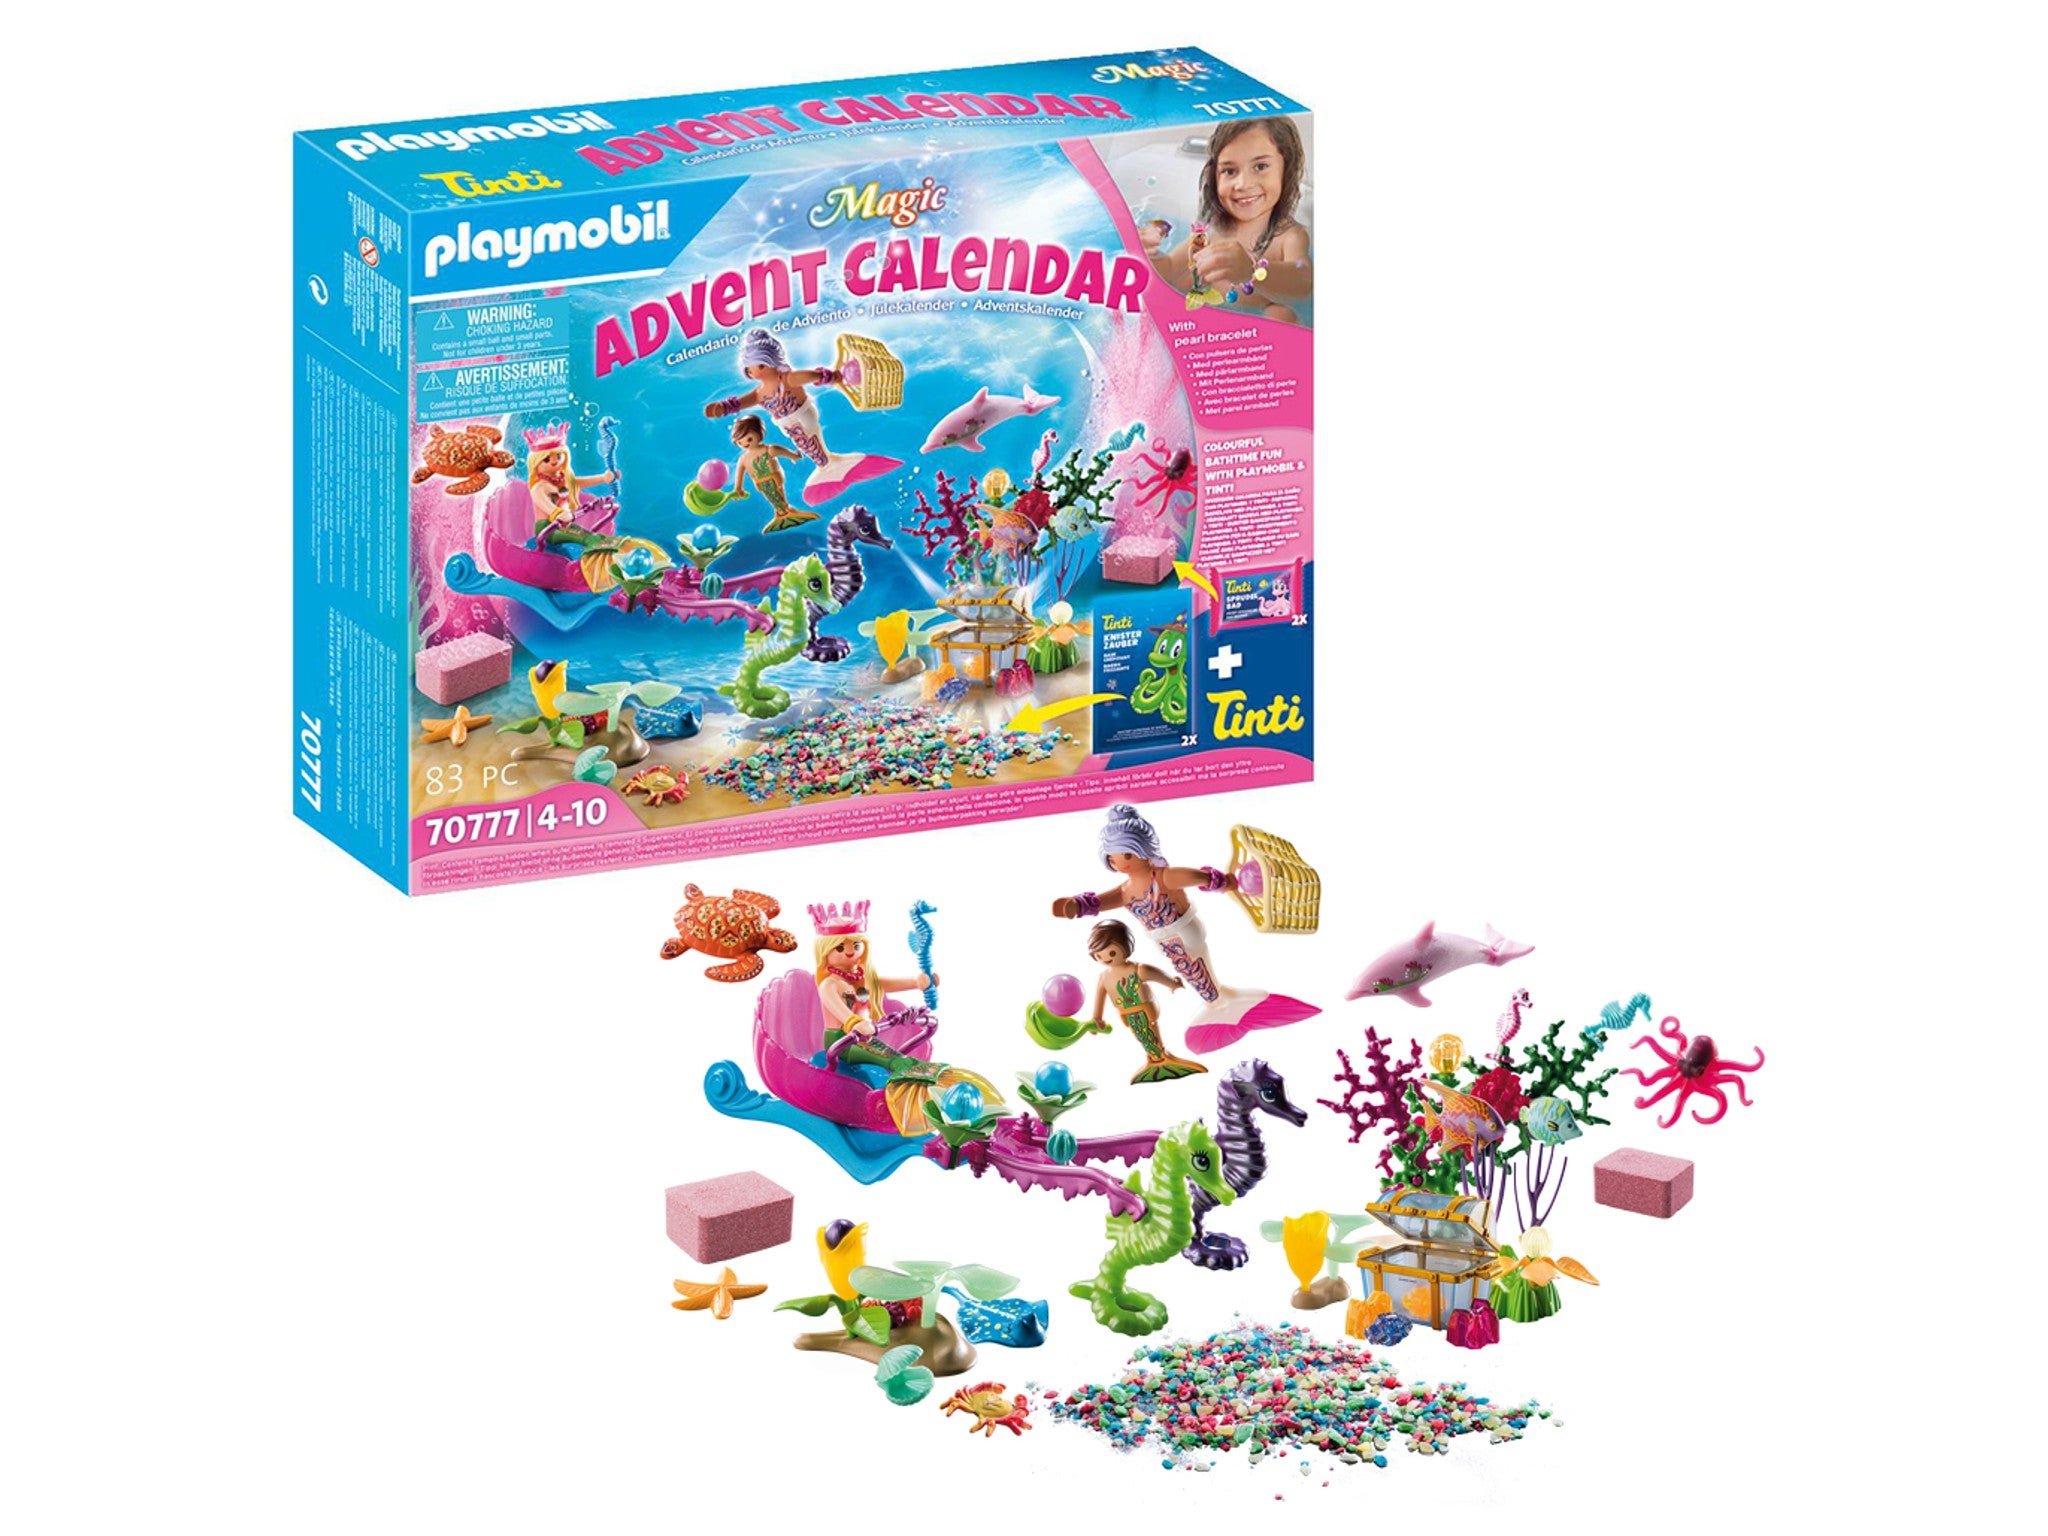 Playmobil advent calendar review 2021: imaginative play Christmas and beyond |